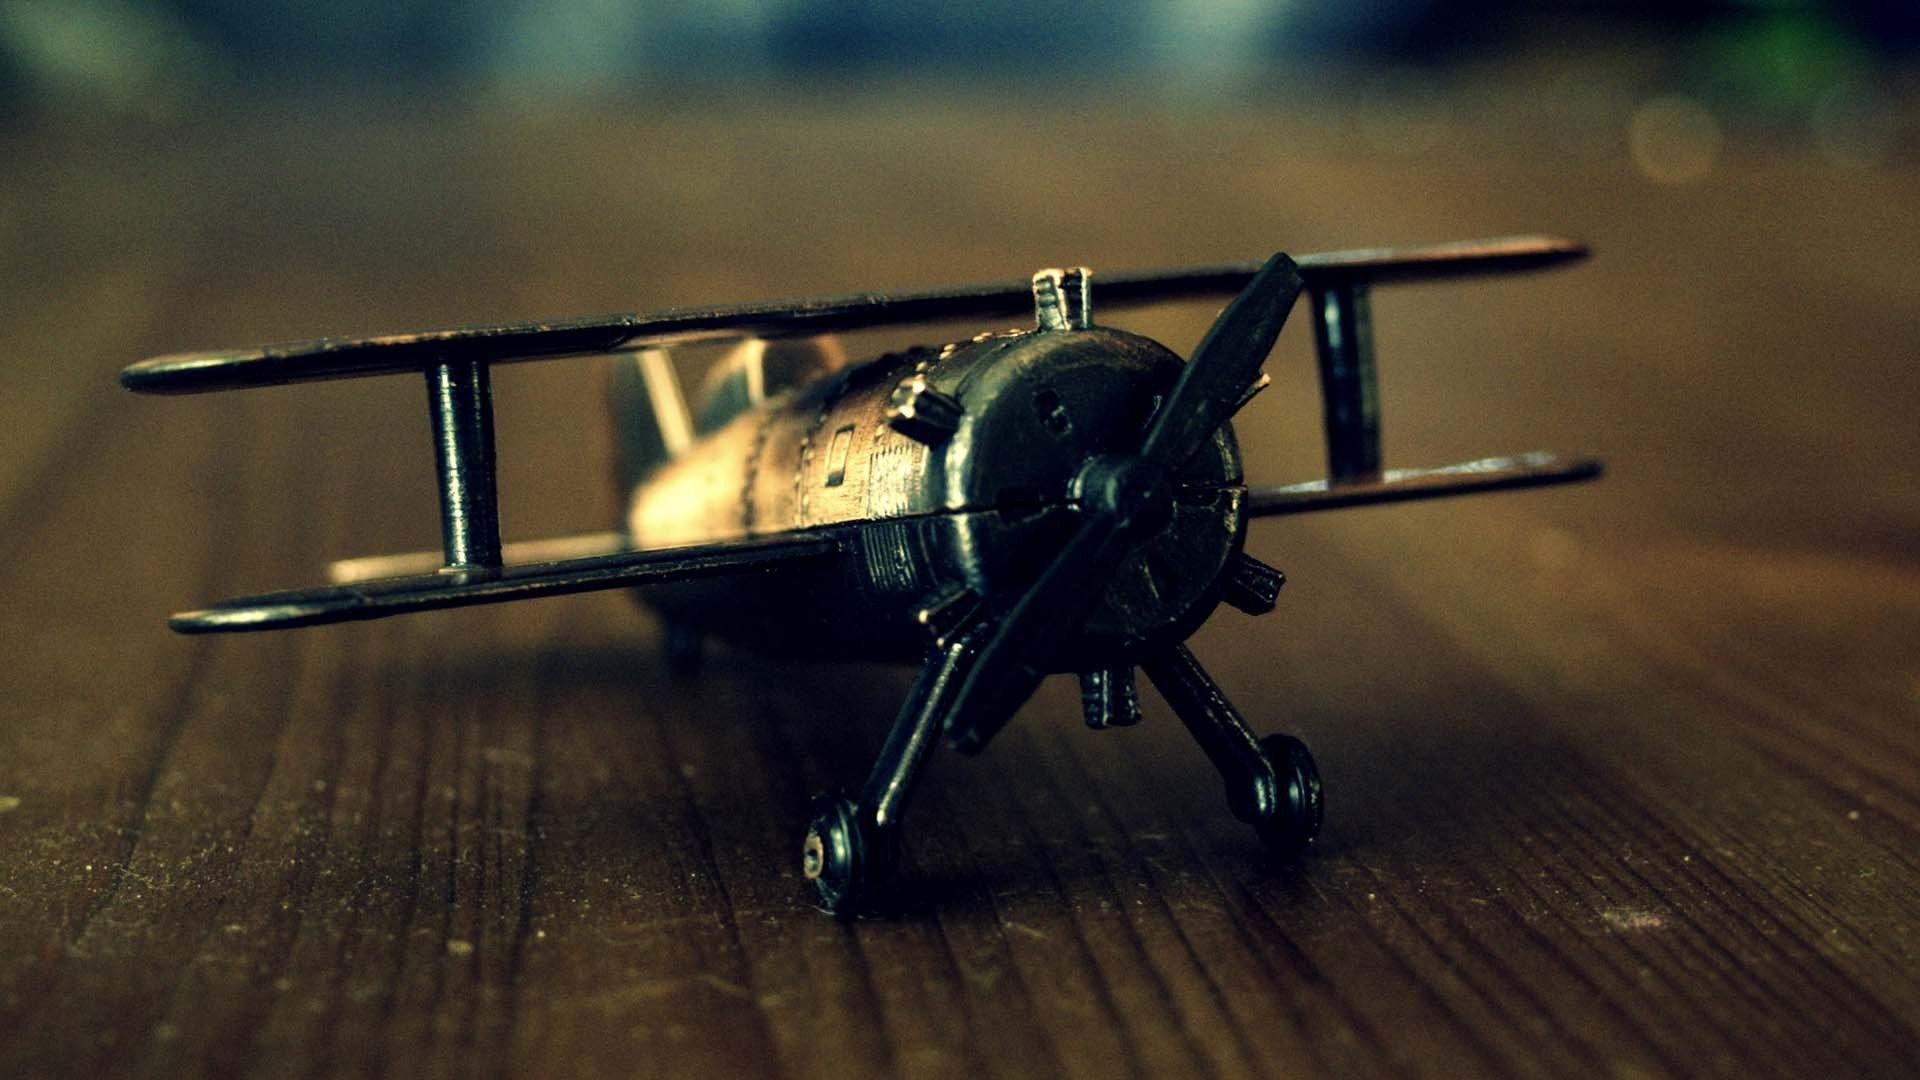 airplane classic vintage toy desktop background wallpaper hd